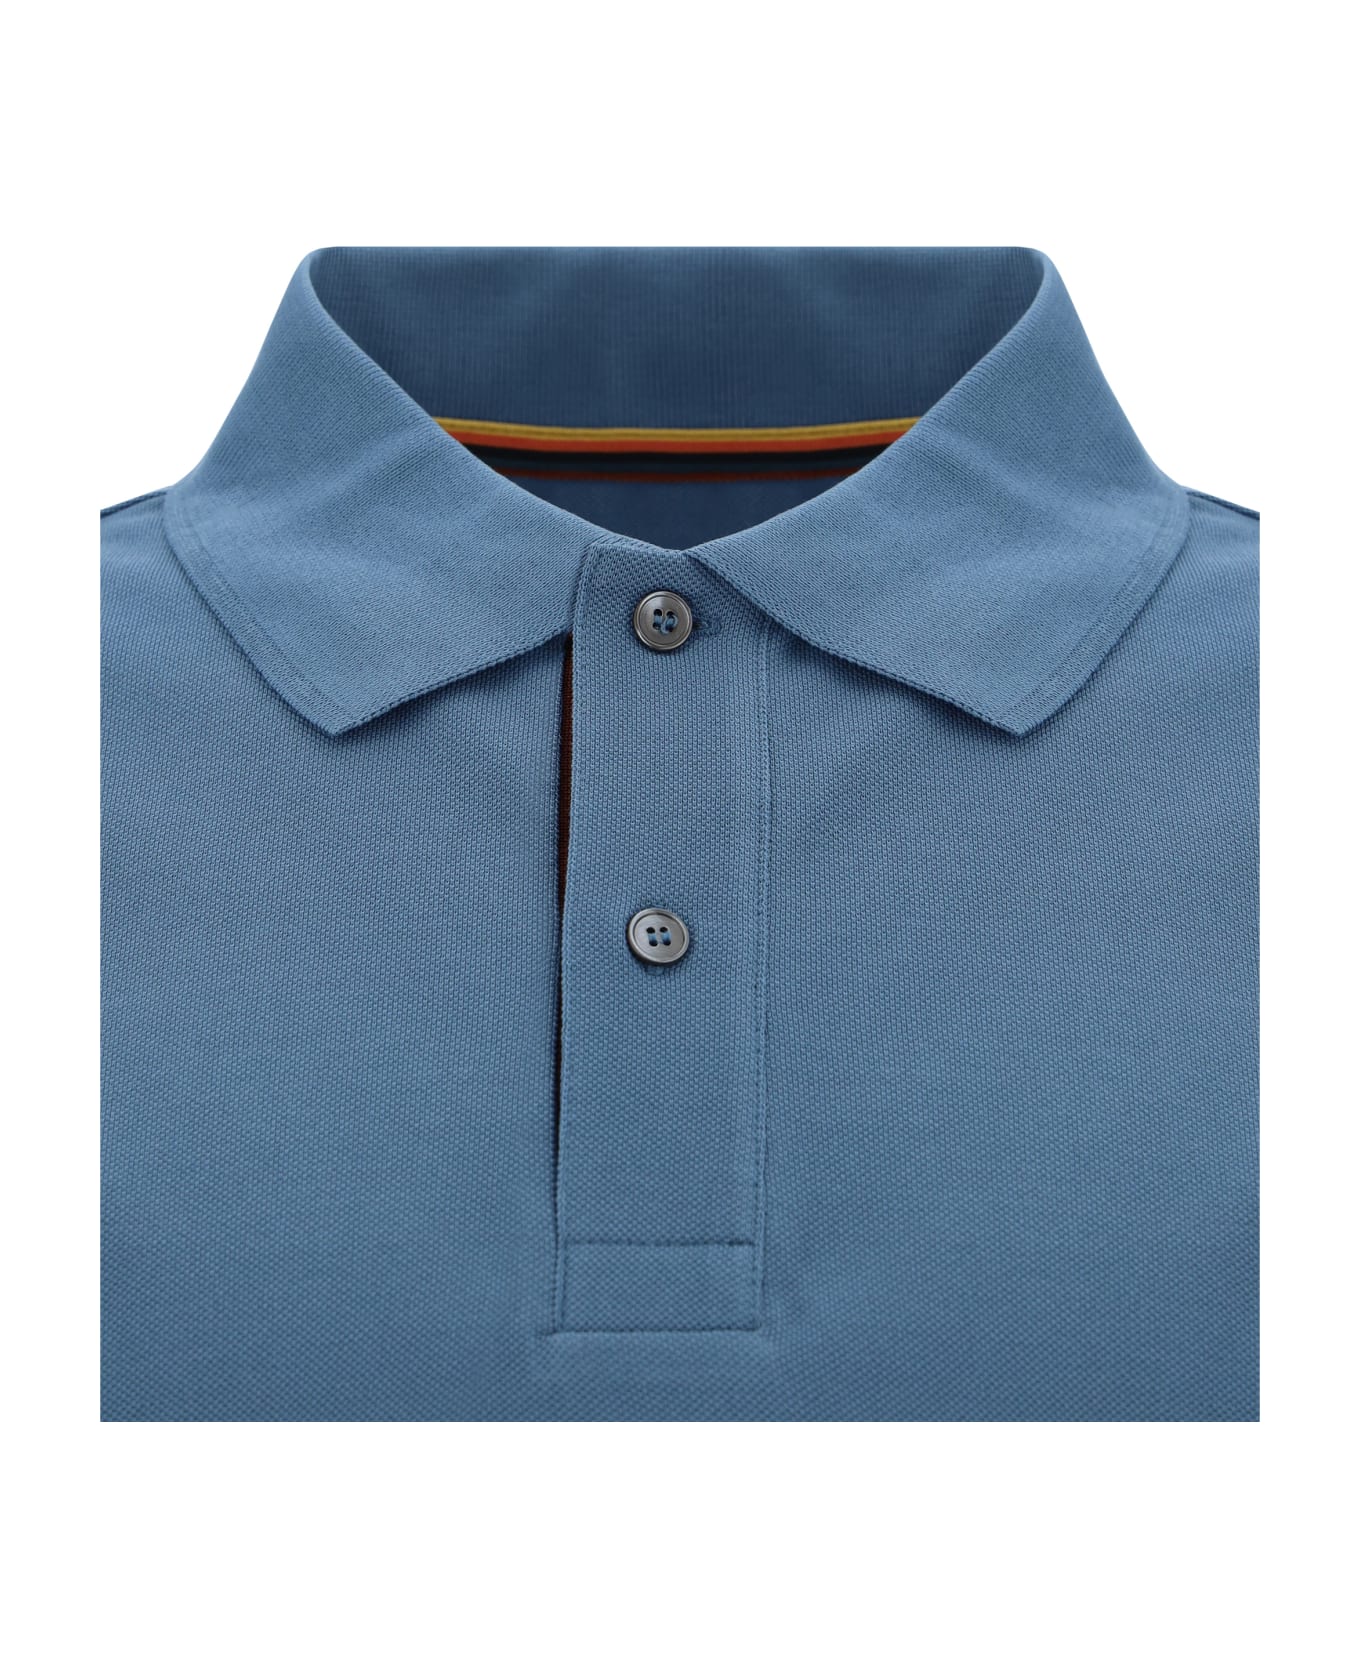 Paul Smith Polo Shirt - 44b ポロシャツ